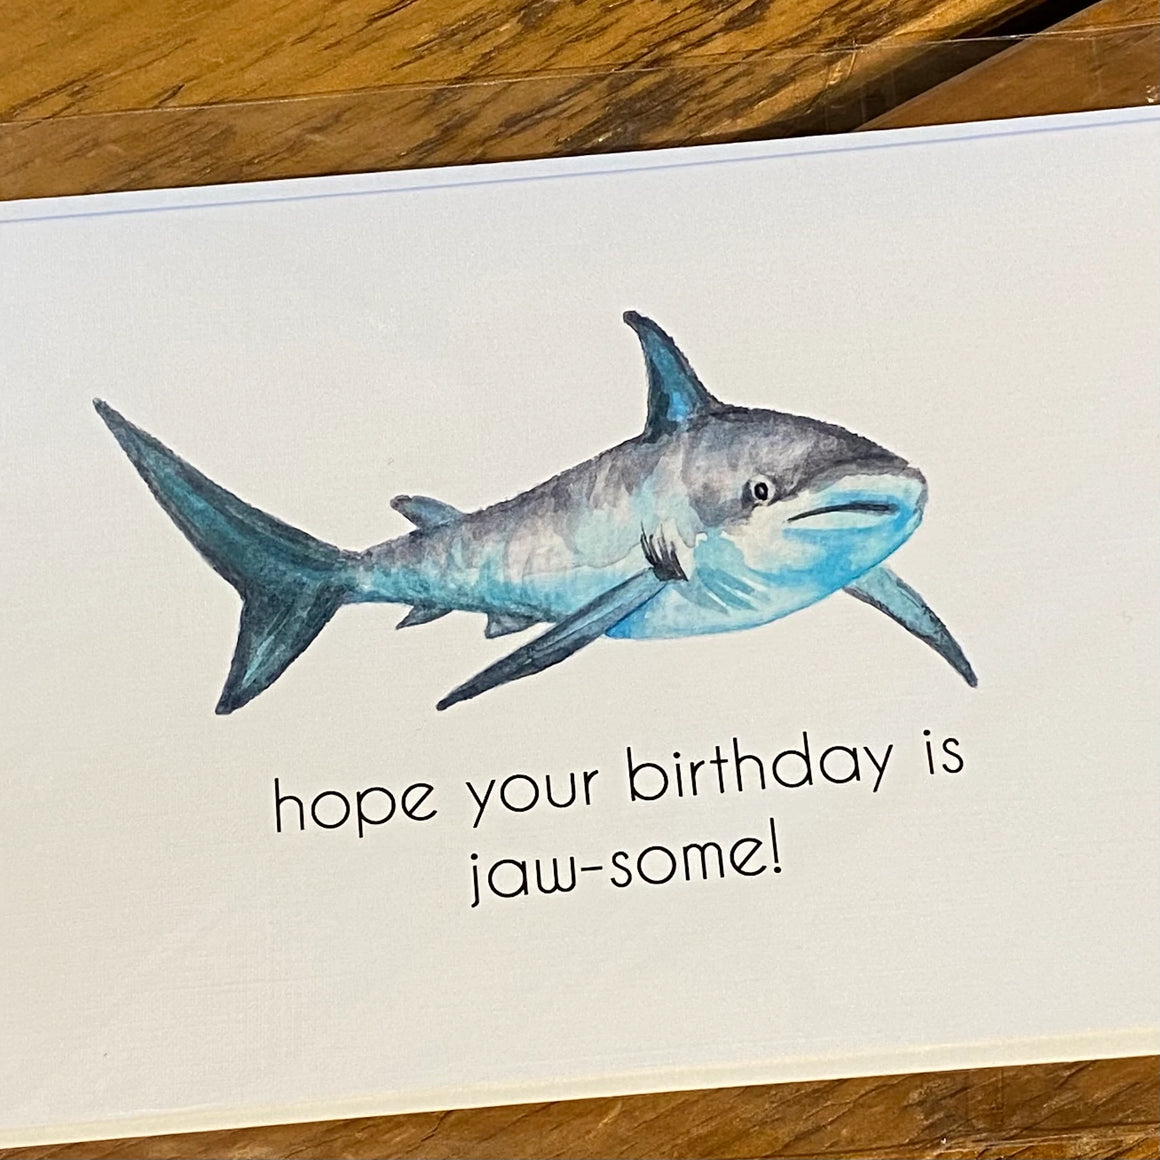 Jaw-some birthday card